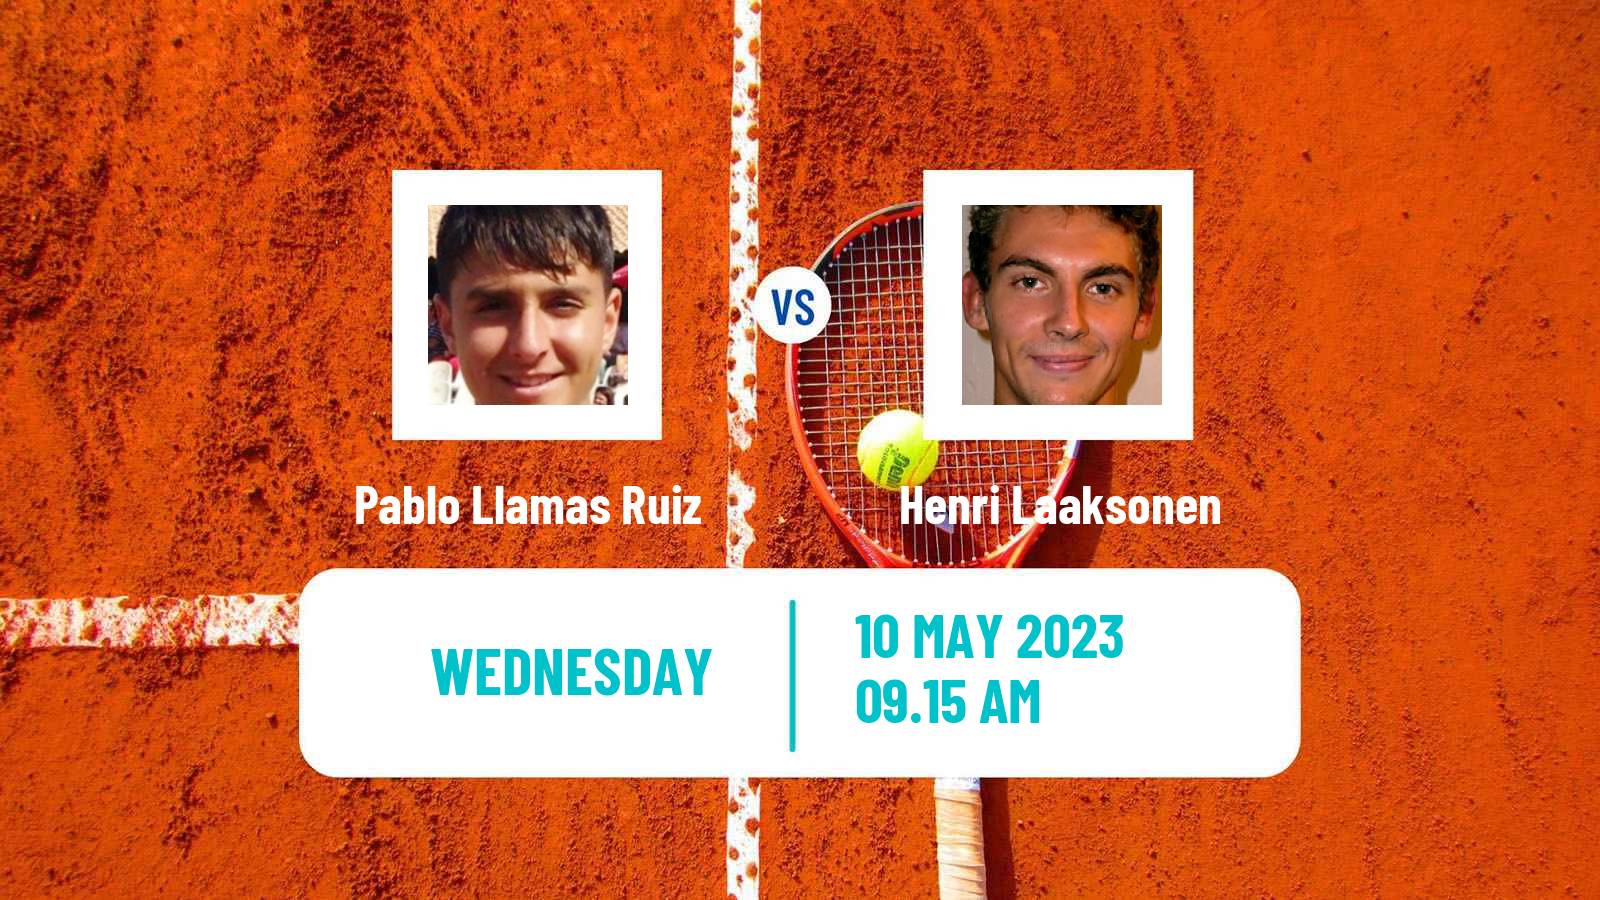 Tennis ATP Challenger Pablo Llamas Ruiz - Henri Laaksonen